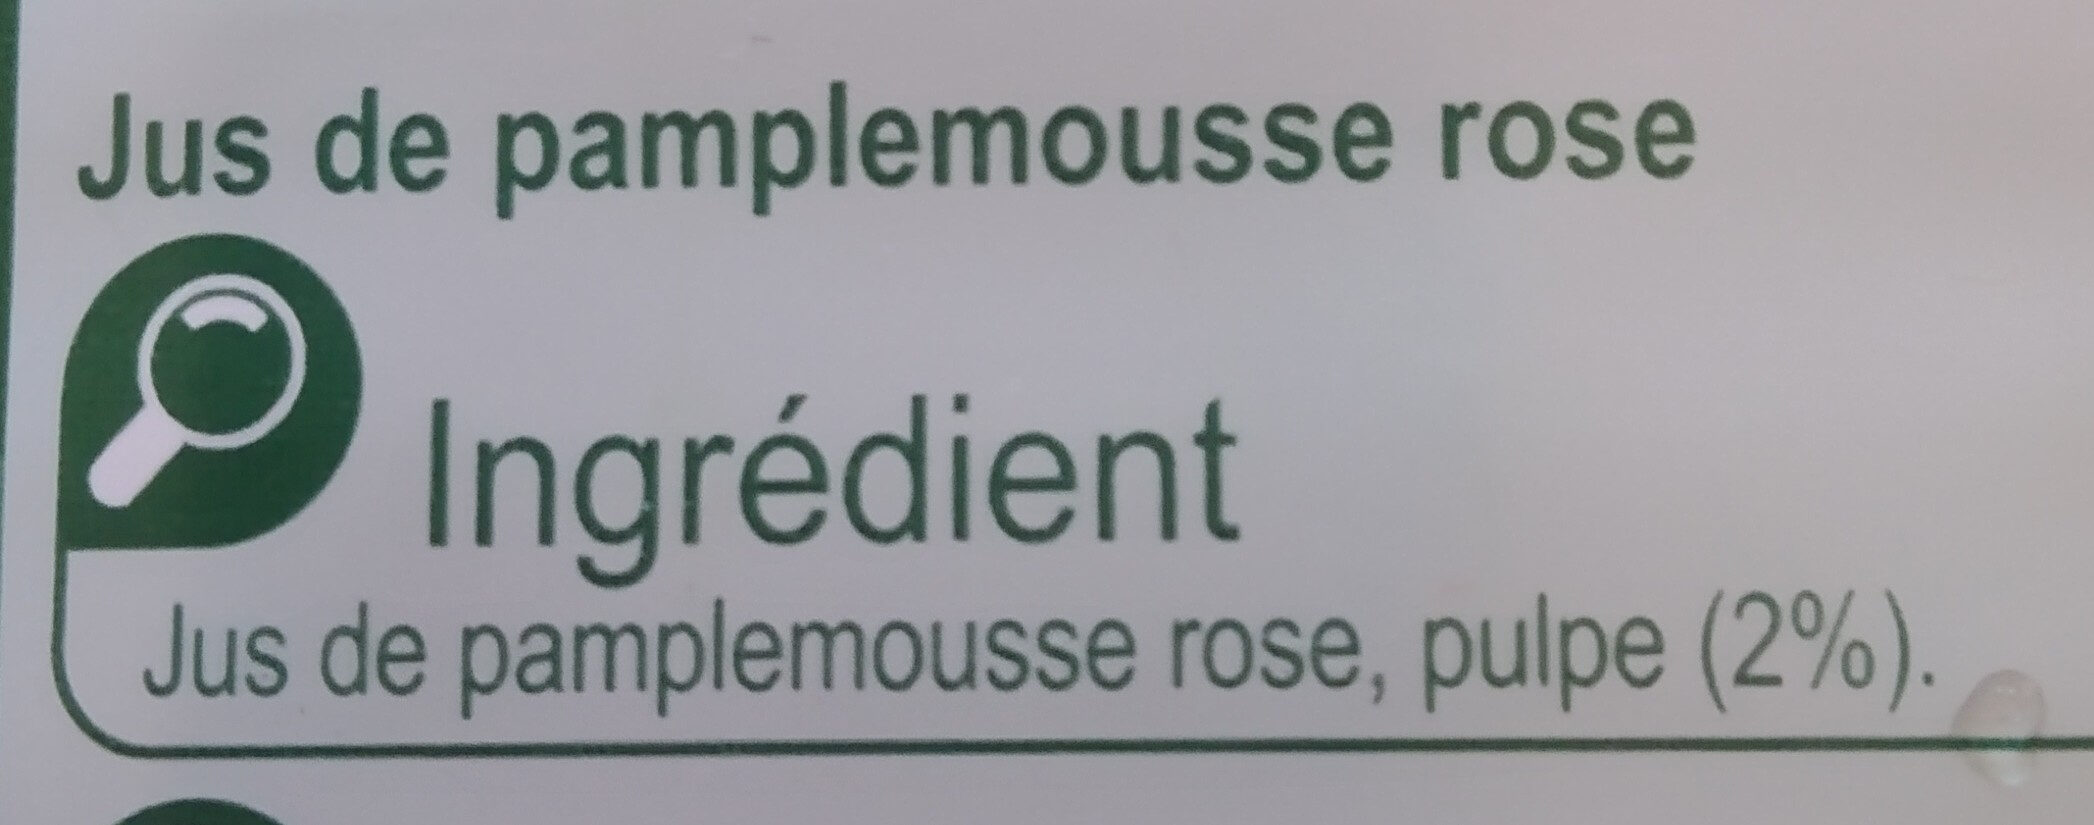 Pamplemousse rose, 100 % Pur Fruit Pressé - Ingrediënten - fr